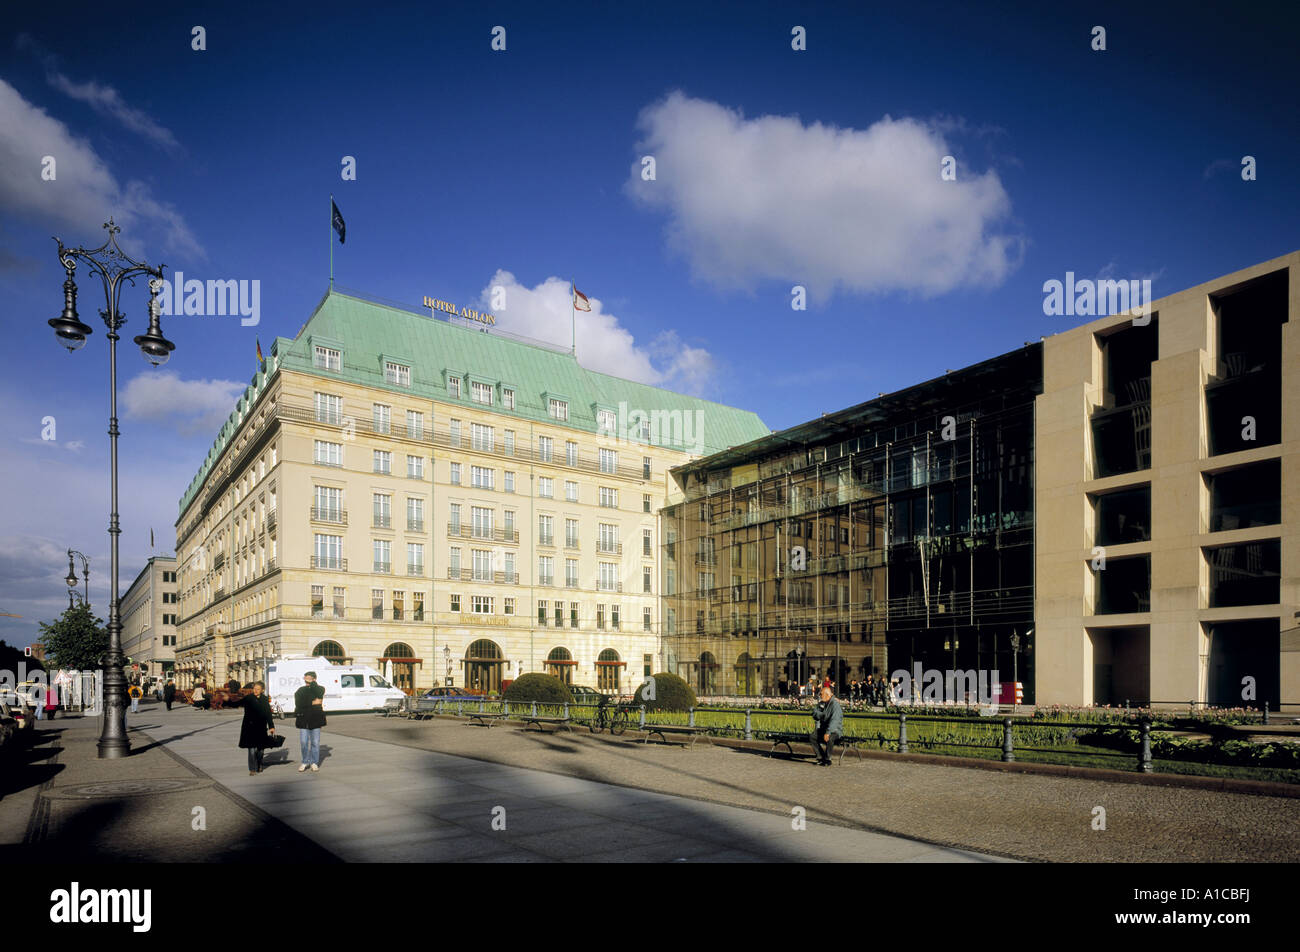 Hotel Adlon and Acadamy of the Arts, Boulevard Unter den Linden, Germany, Pariser Platz, Berlin Stock Photo